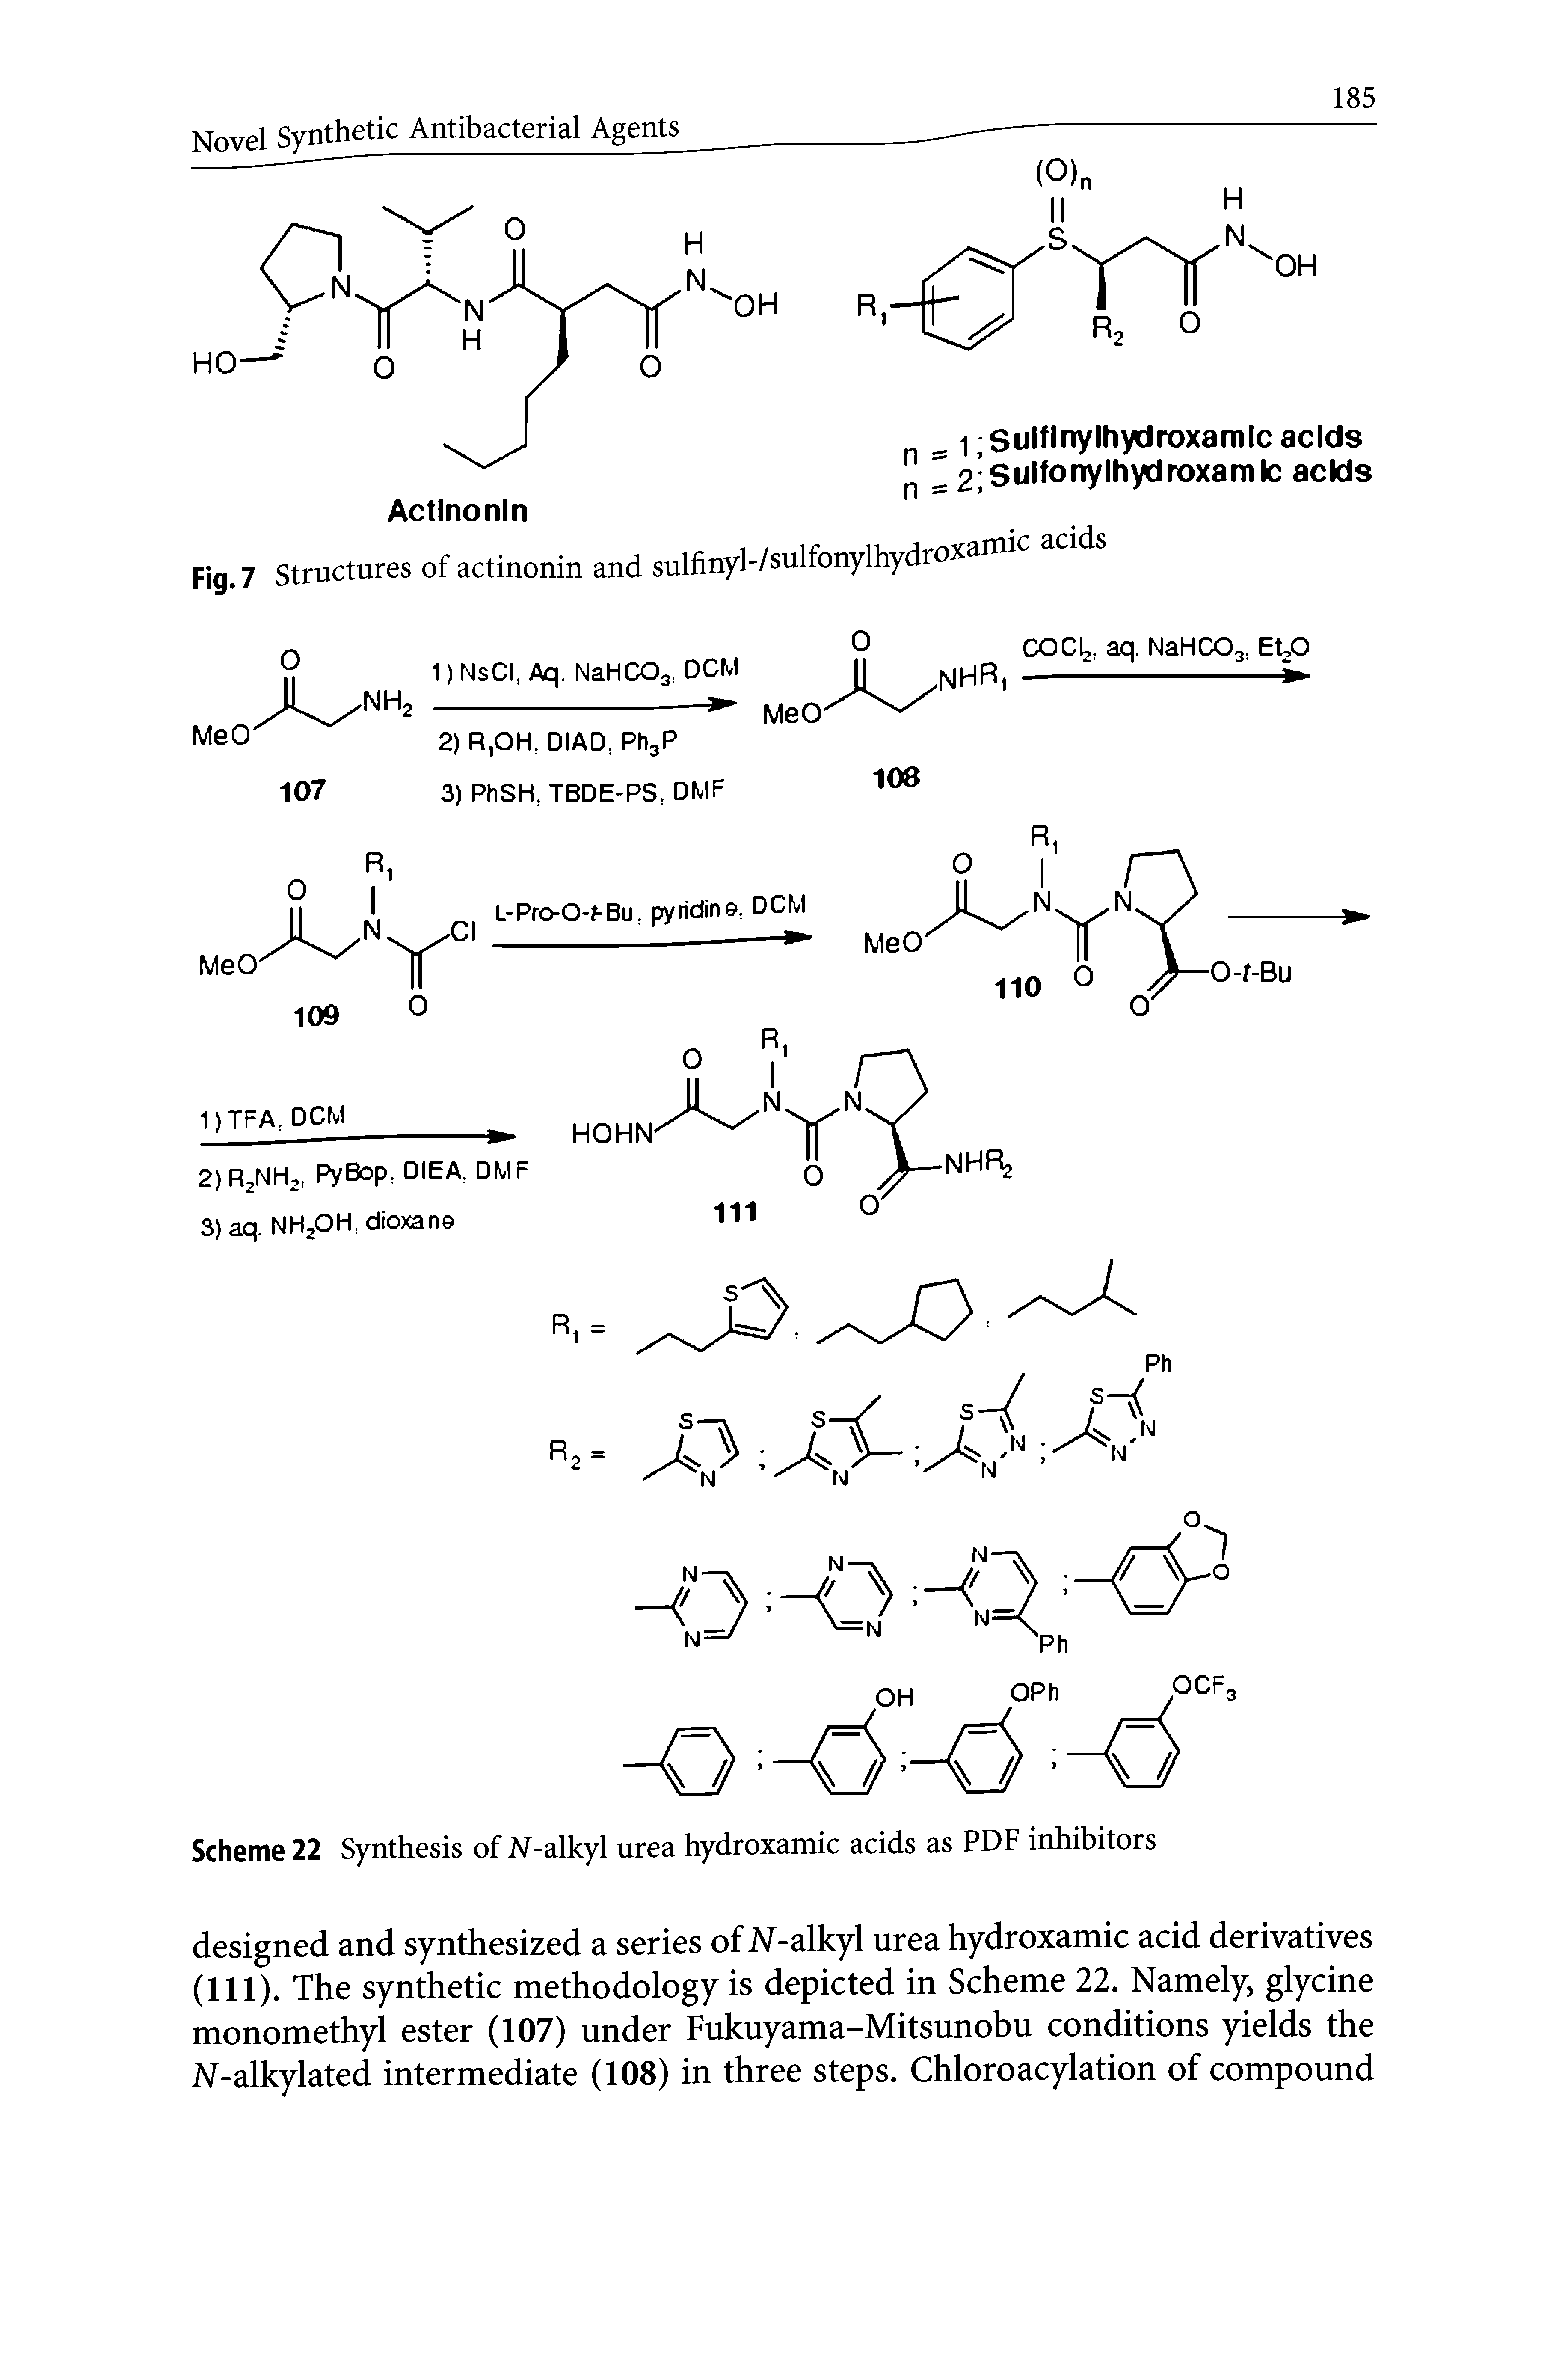 Scheme 22 Synthesis of N-alkyl urea hydroxamic acids as PDF inhibitors...